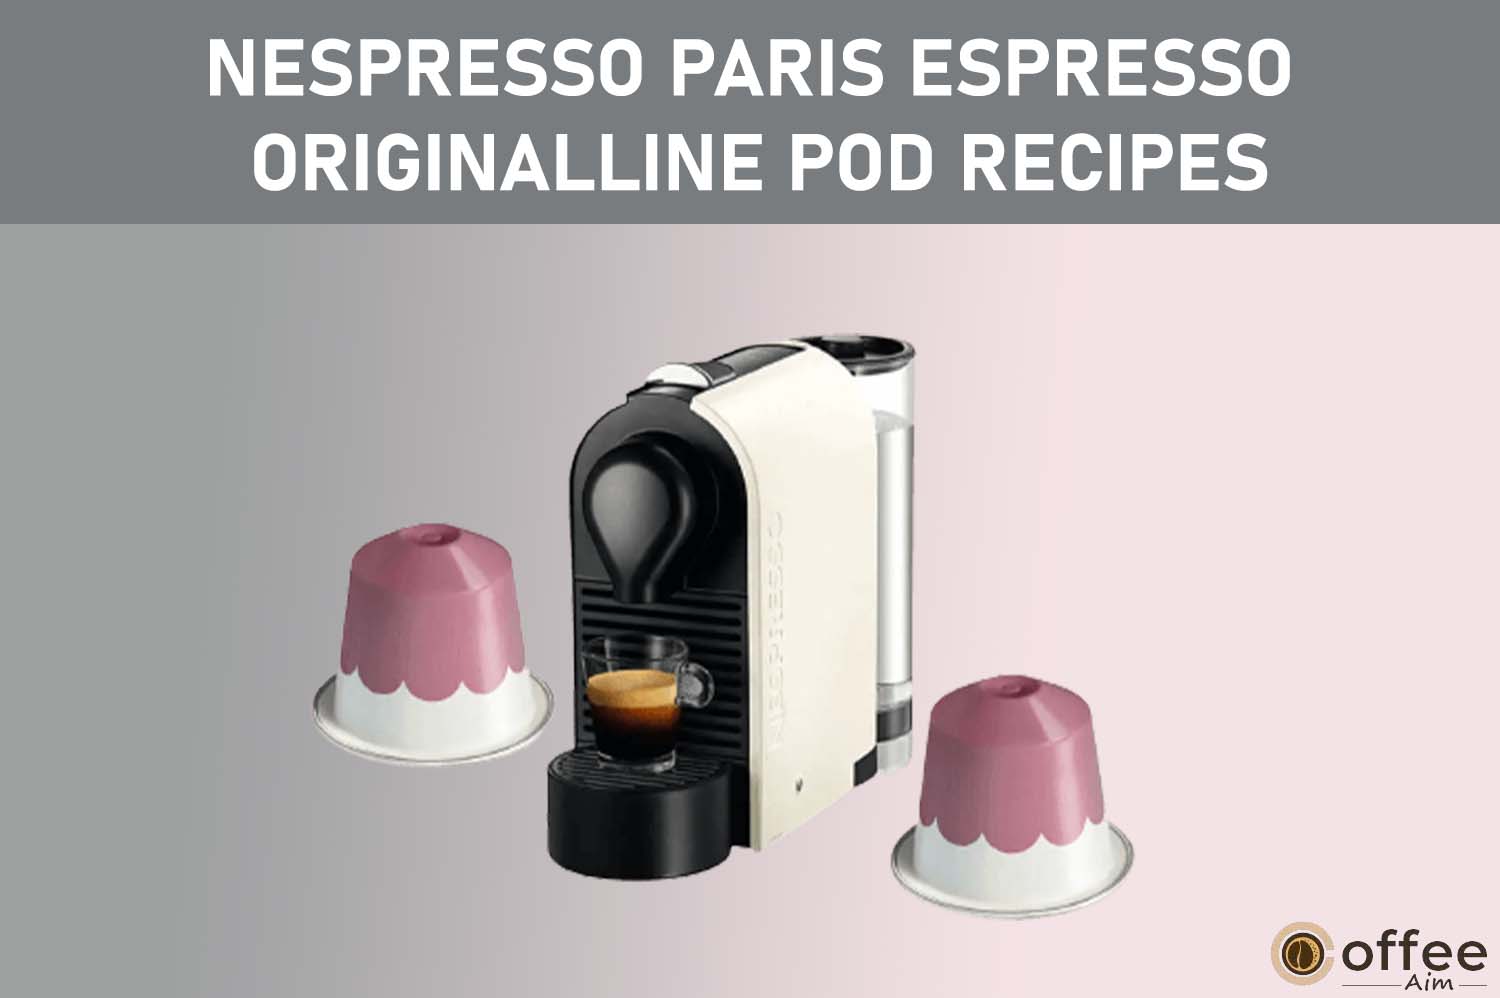 Featured image for the article "Nespresso Paris Espresso OriginalLine Pod Recipes"